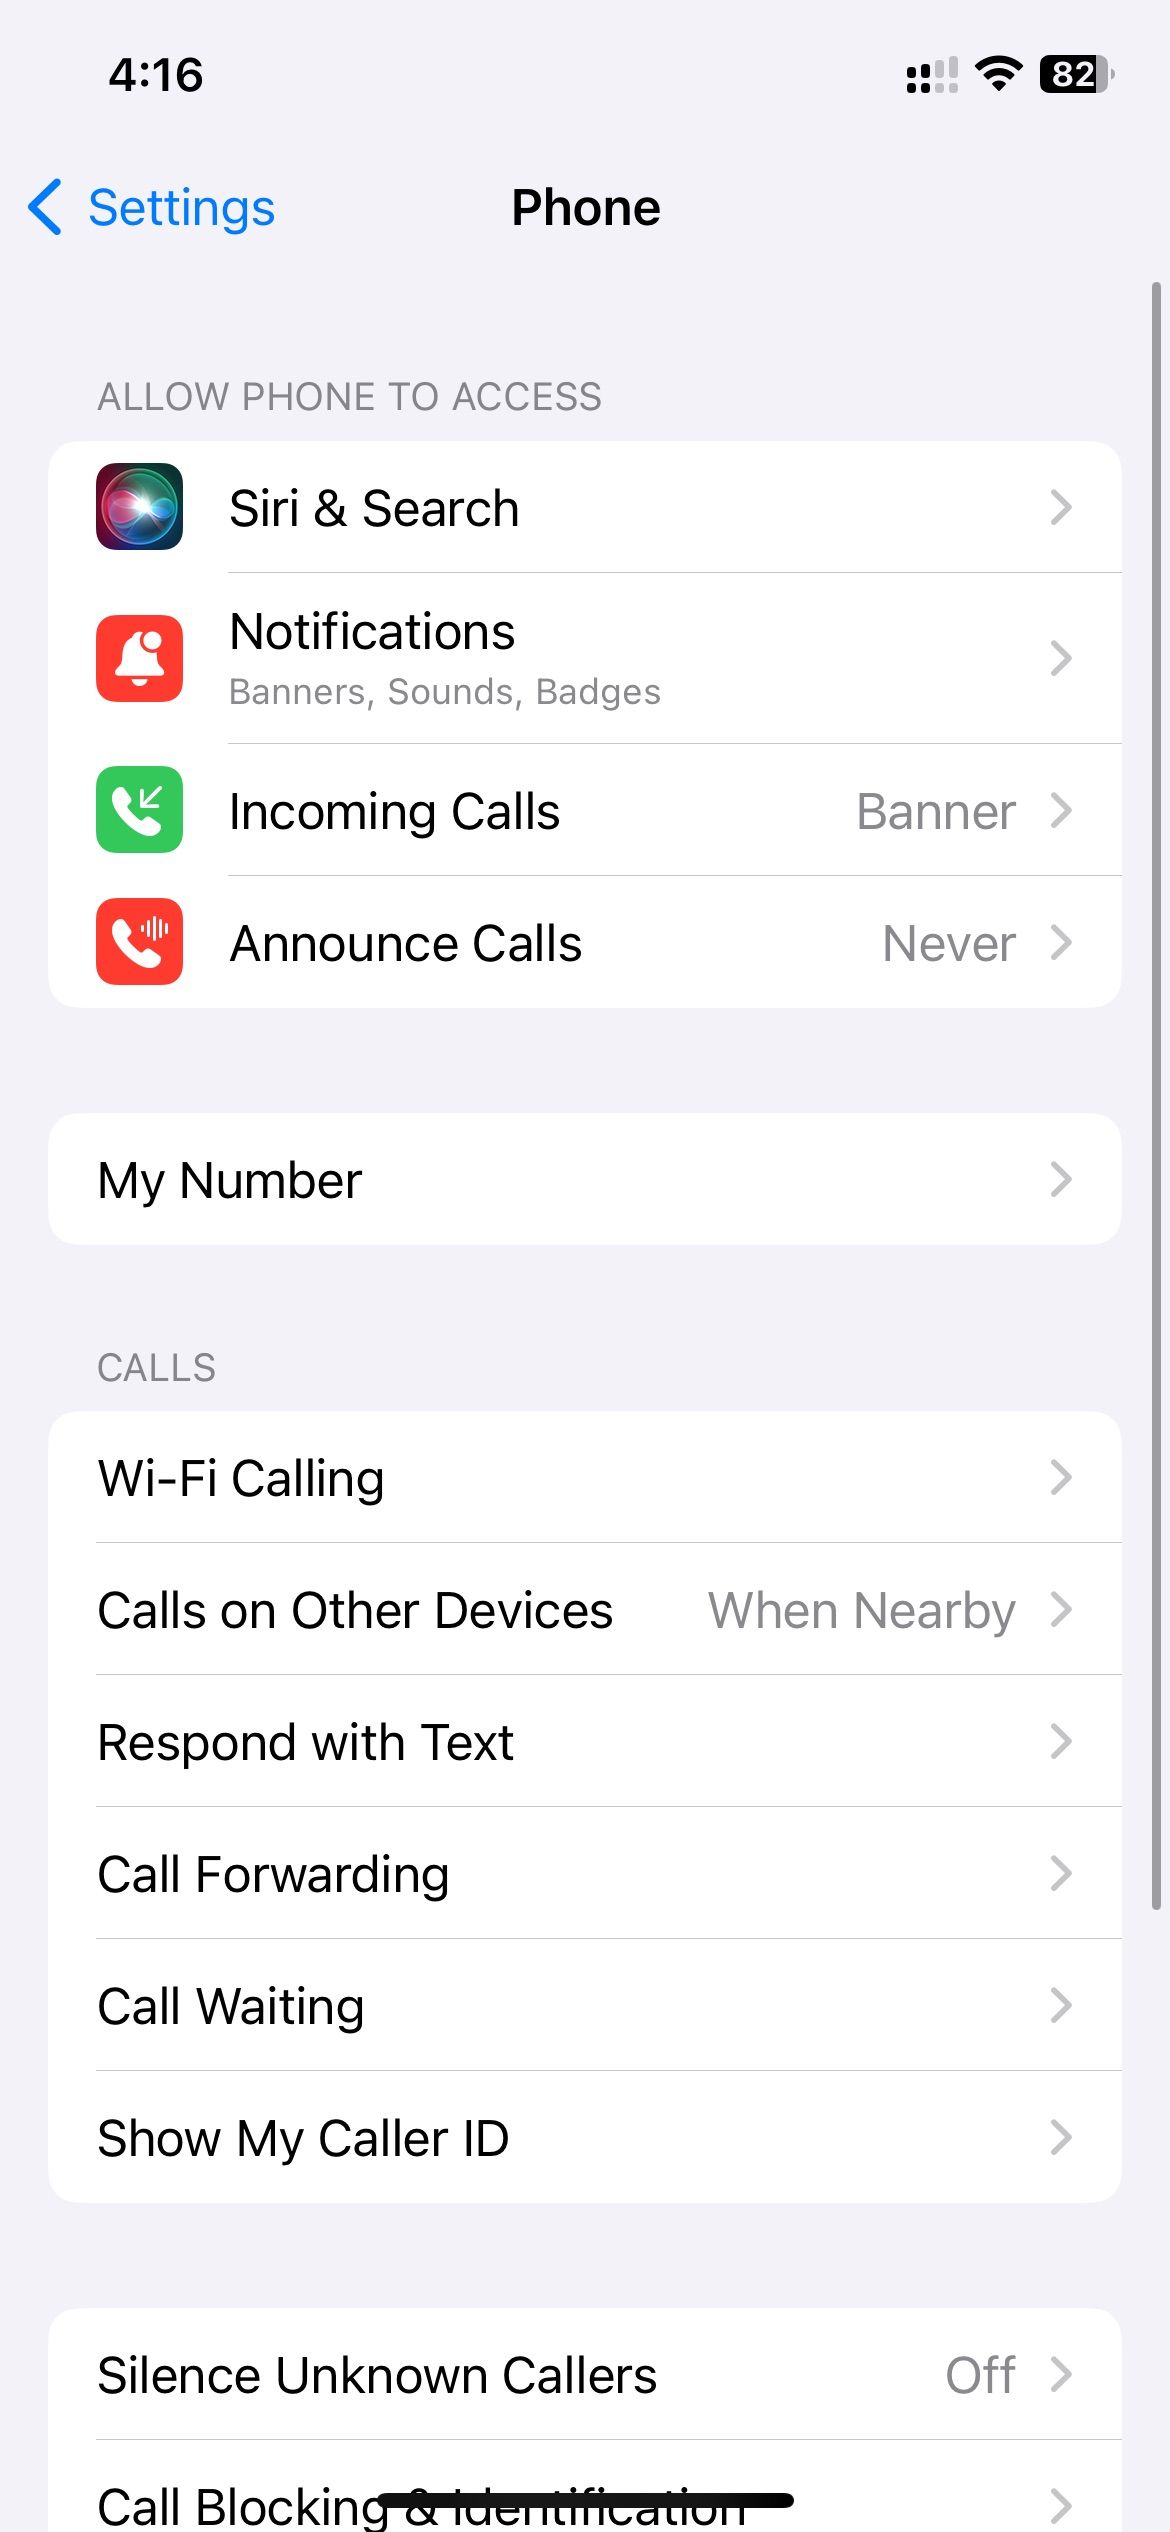 Phone settings in iOS